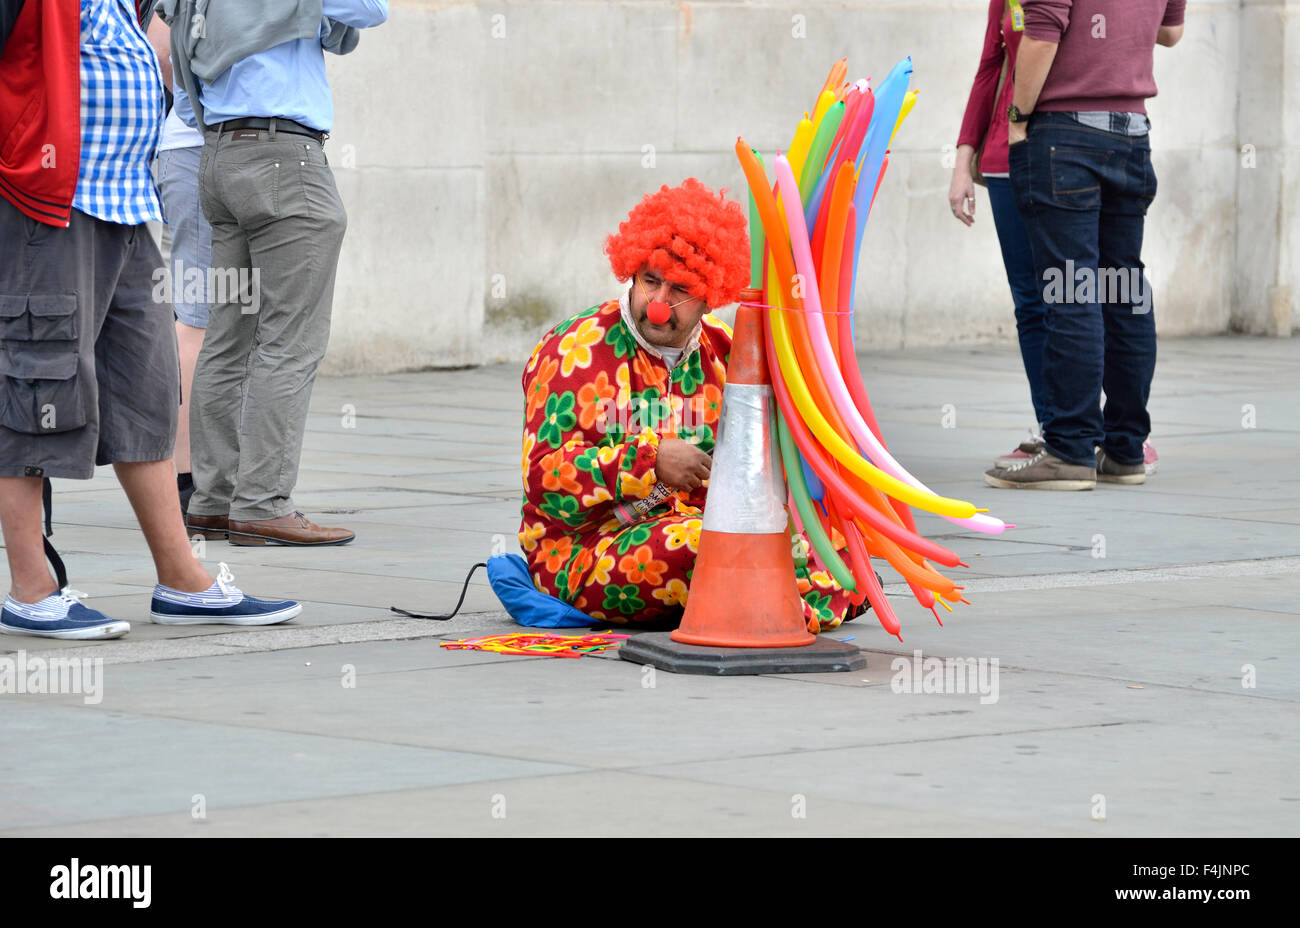 London, England, UK. Clown with balloons sitting in Trafalgar Square Stock Photo